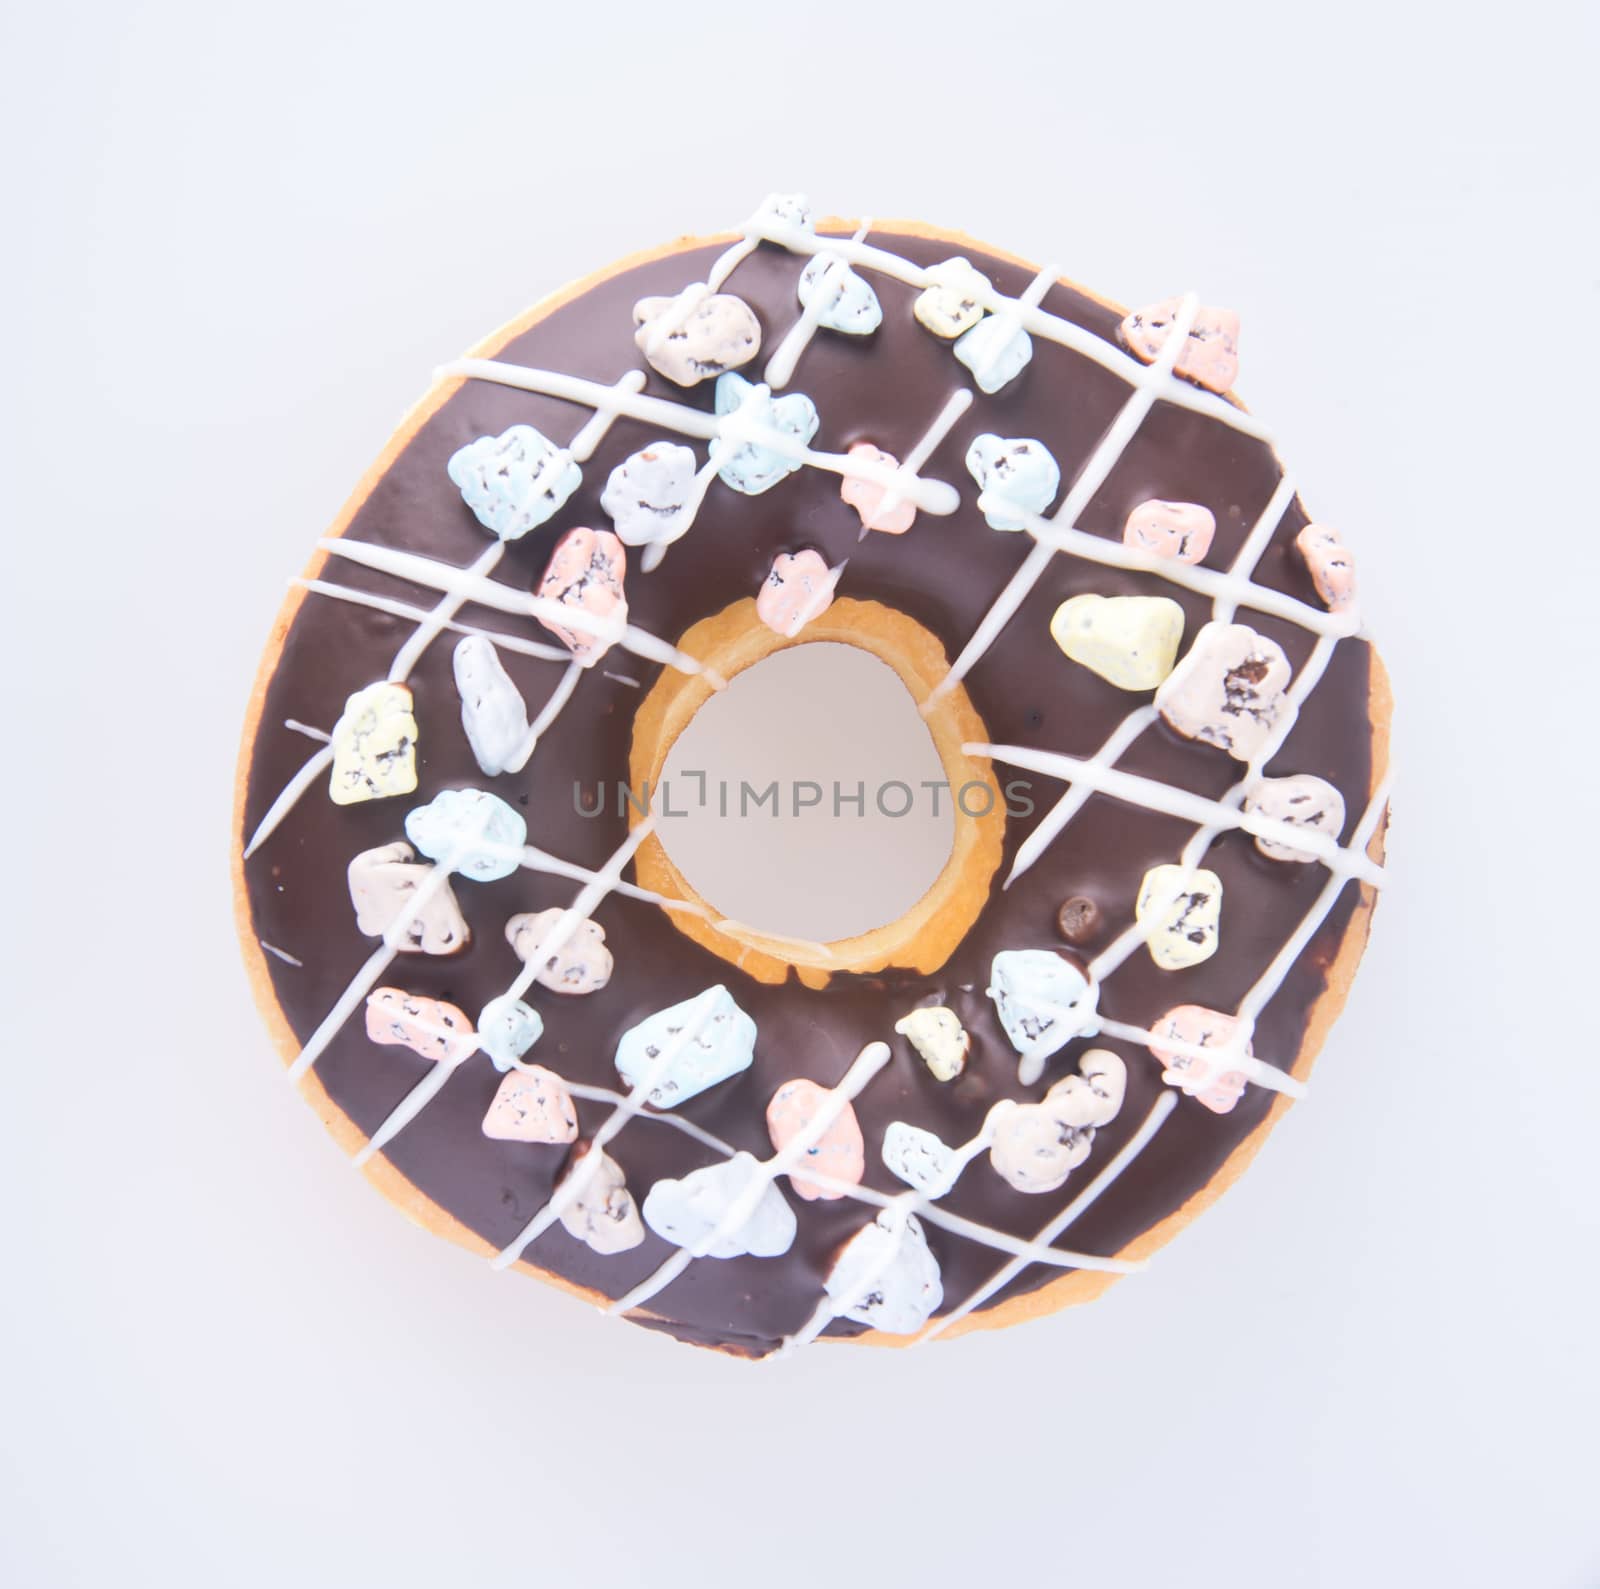 donut. donut on a background